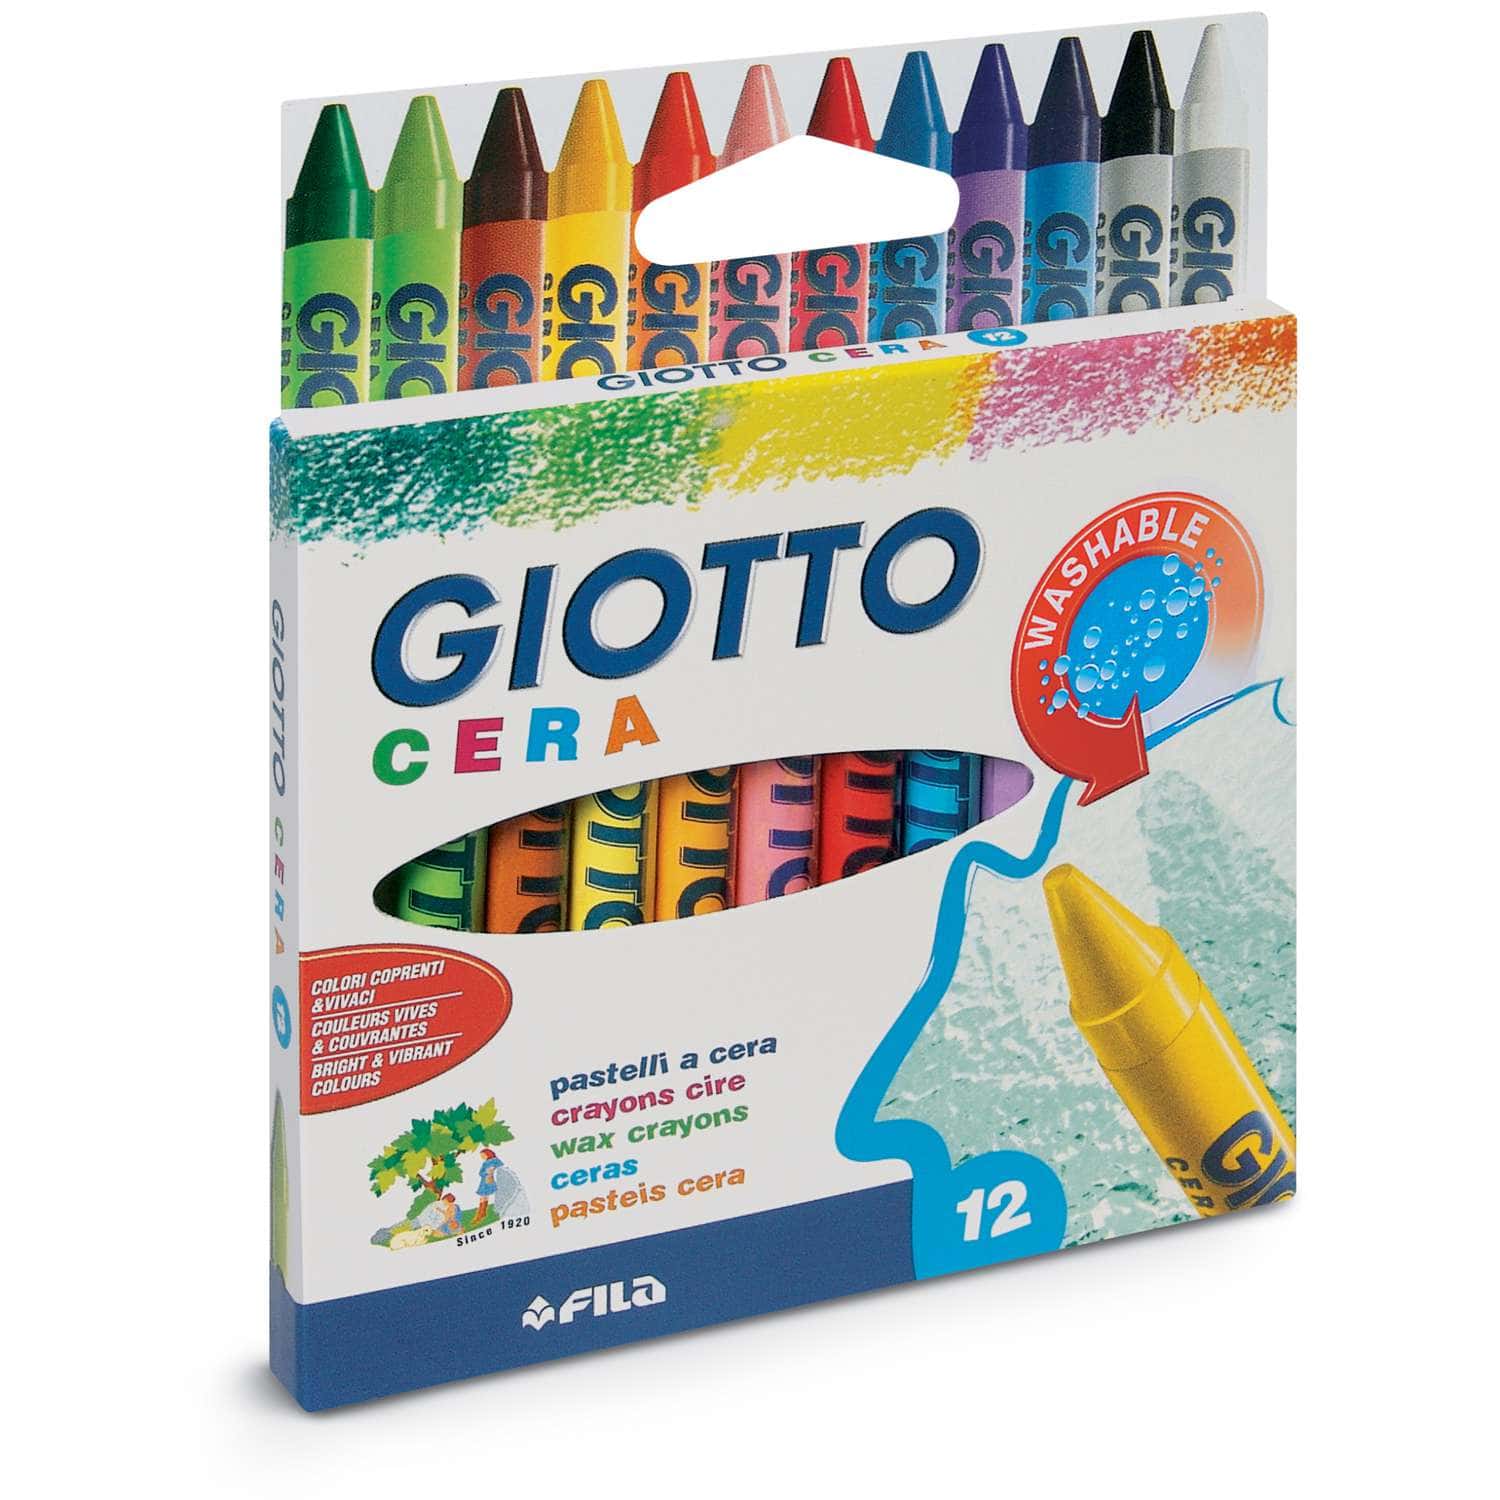 Giotto Cera Wax Crayon Sets, 50,000+ Art Supplies